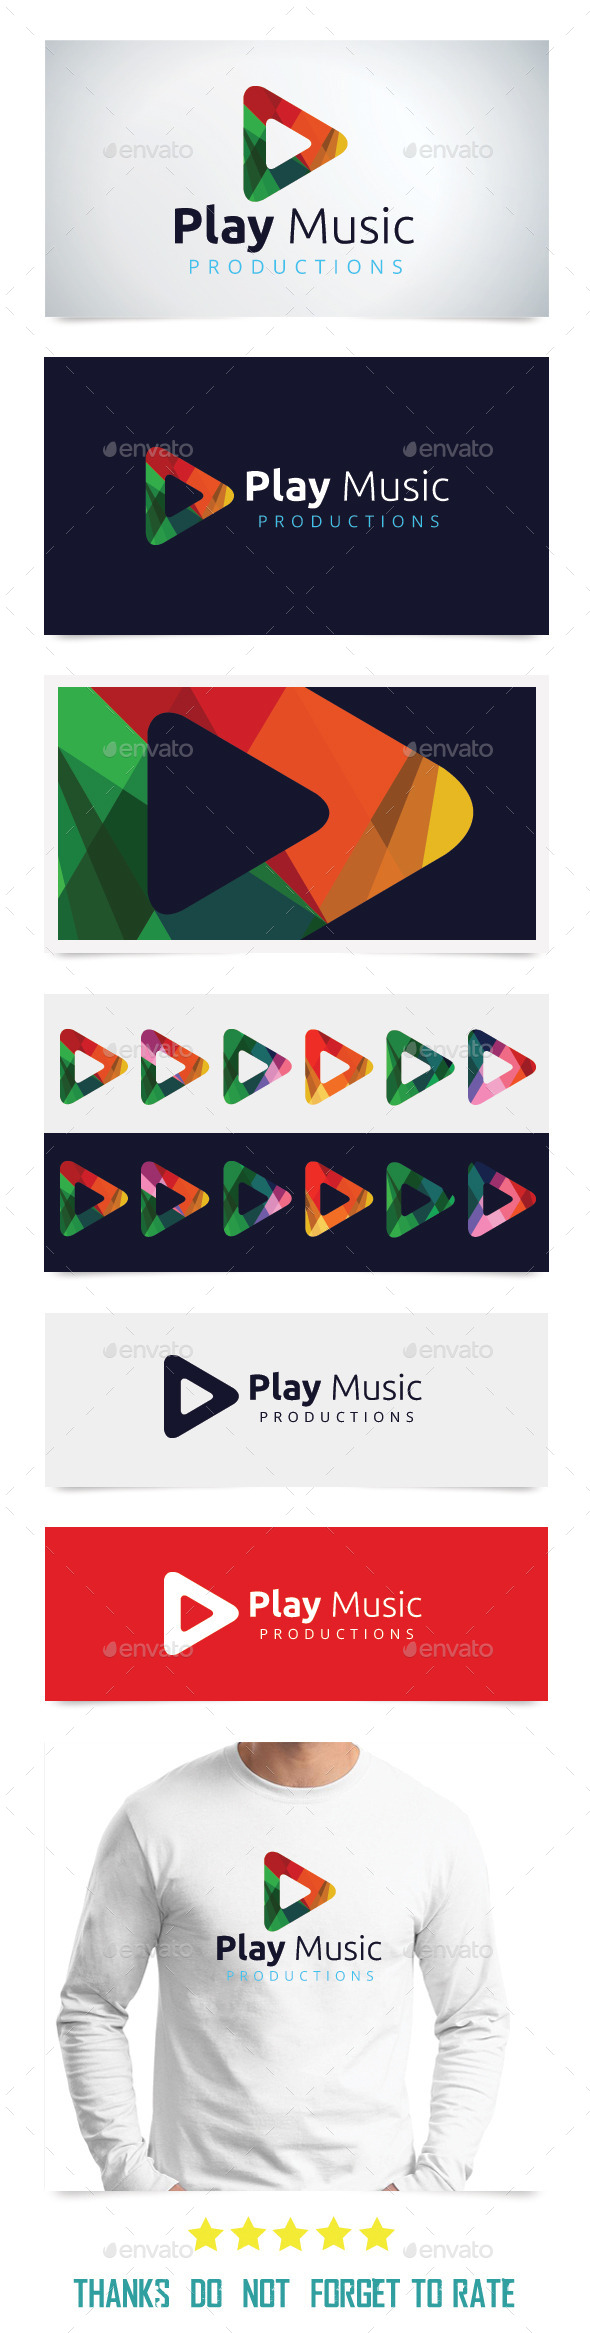 Play Music Logo Templates